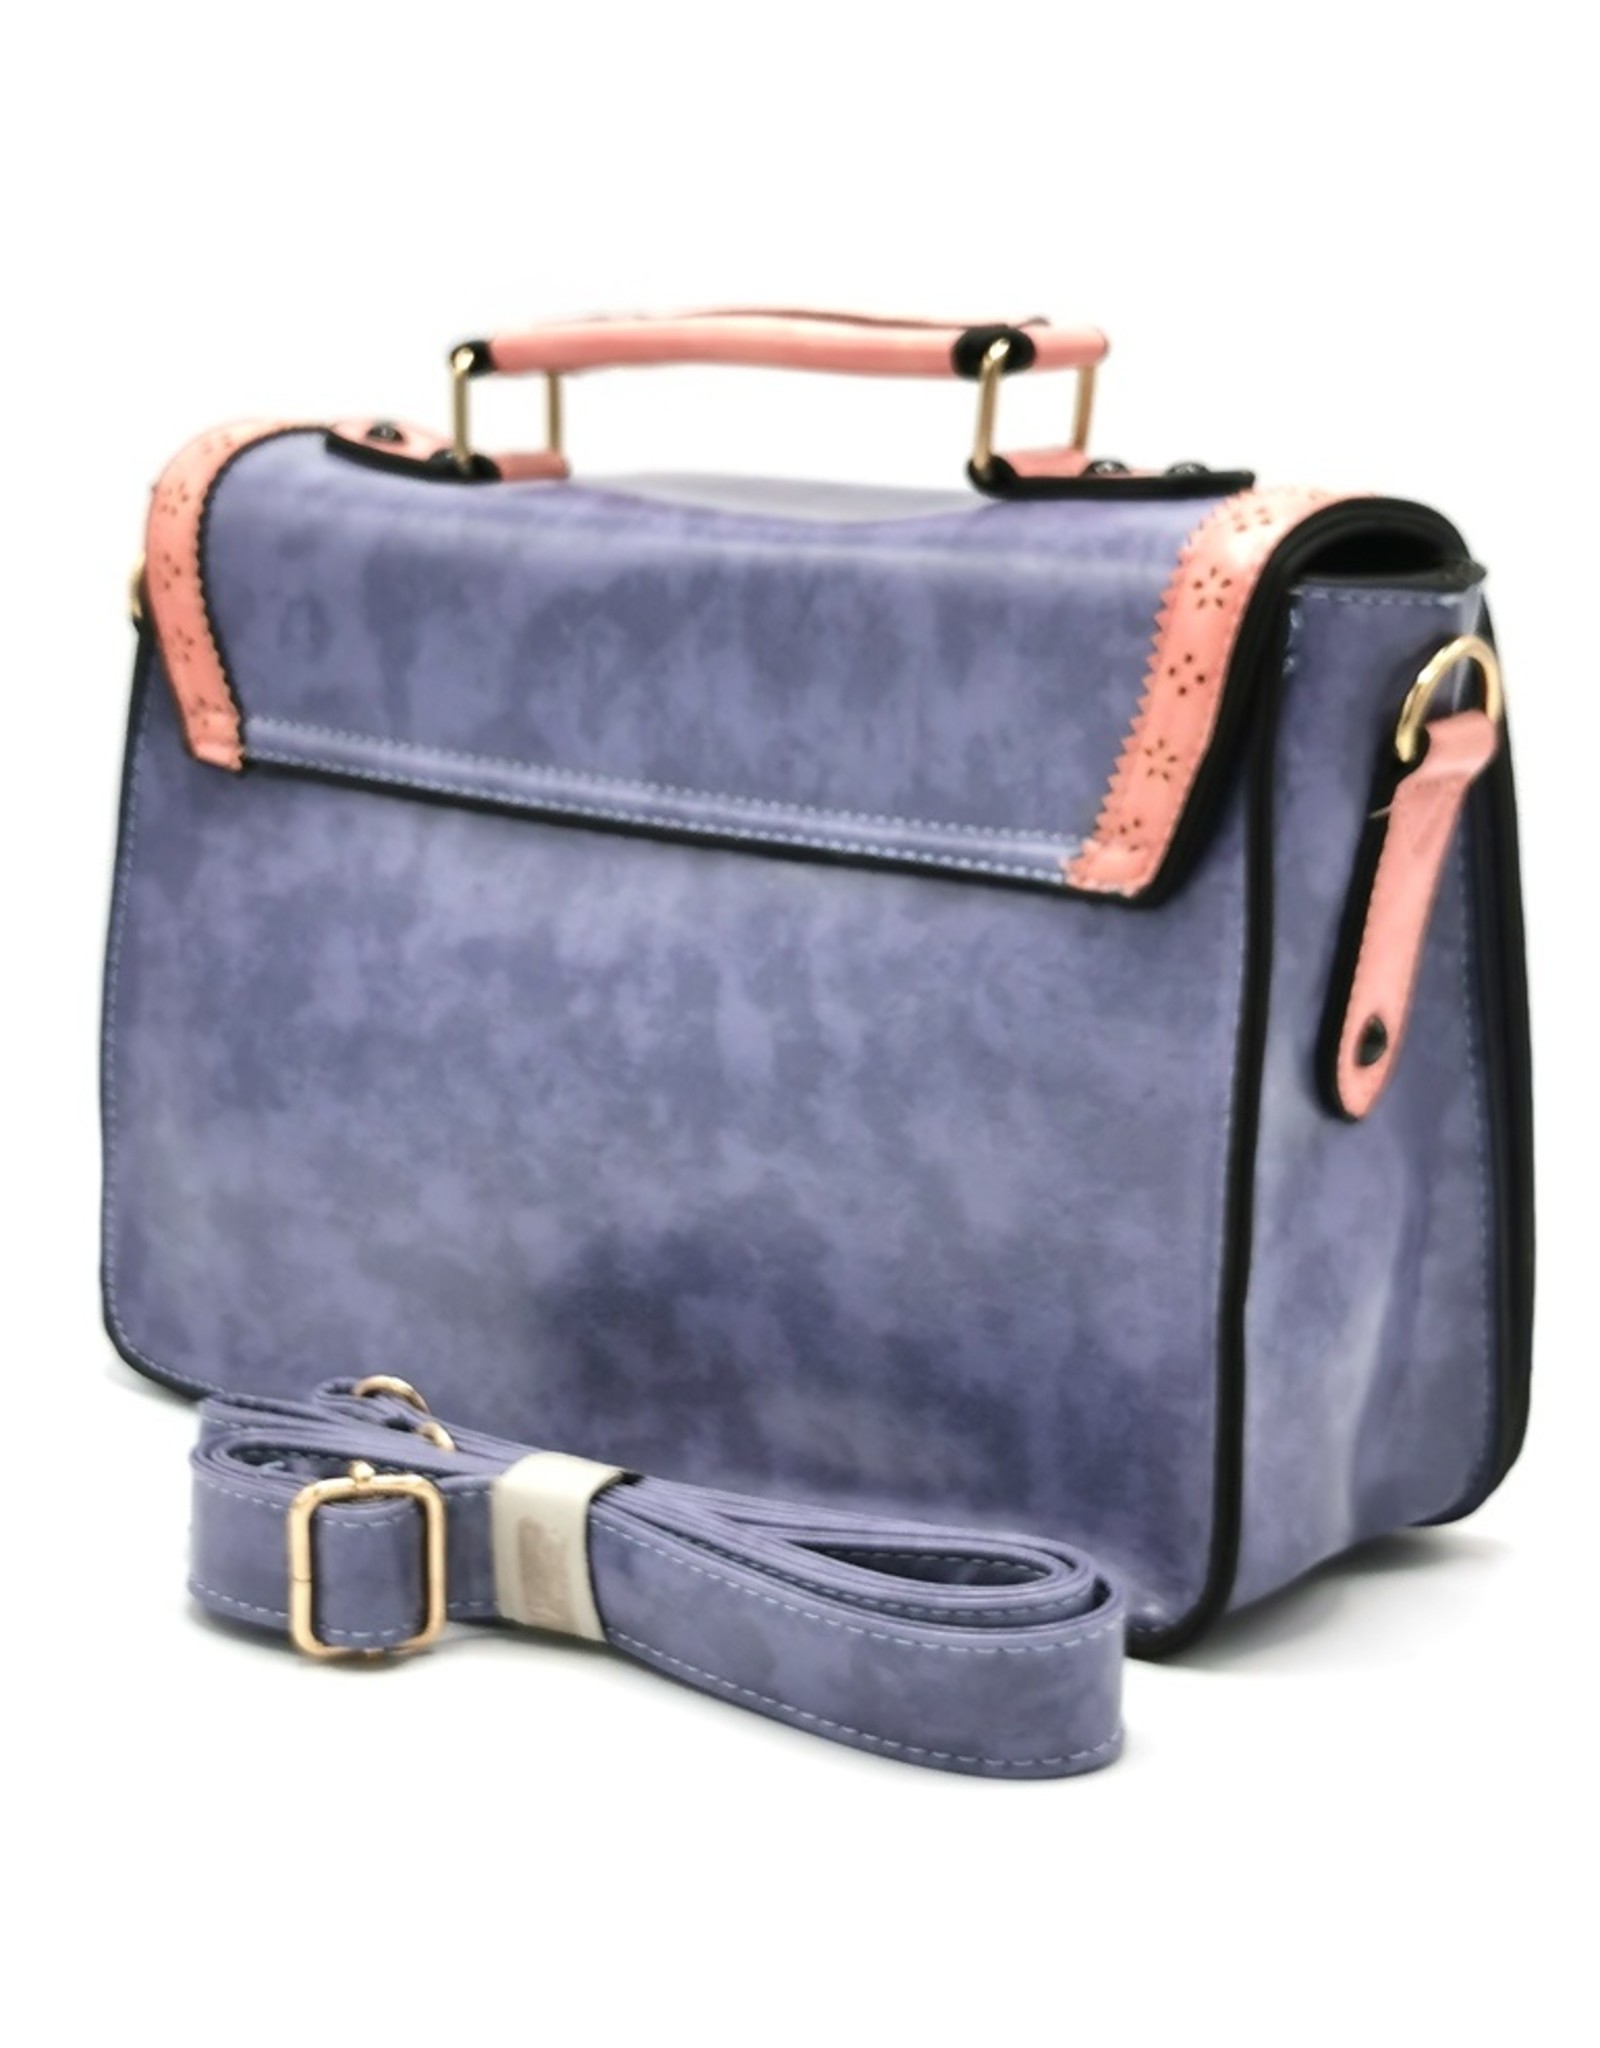 Banned Retro bags  Vintage bags - Banned Retro Scandal Handbag Grey-blue-pink